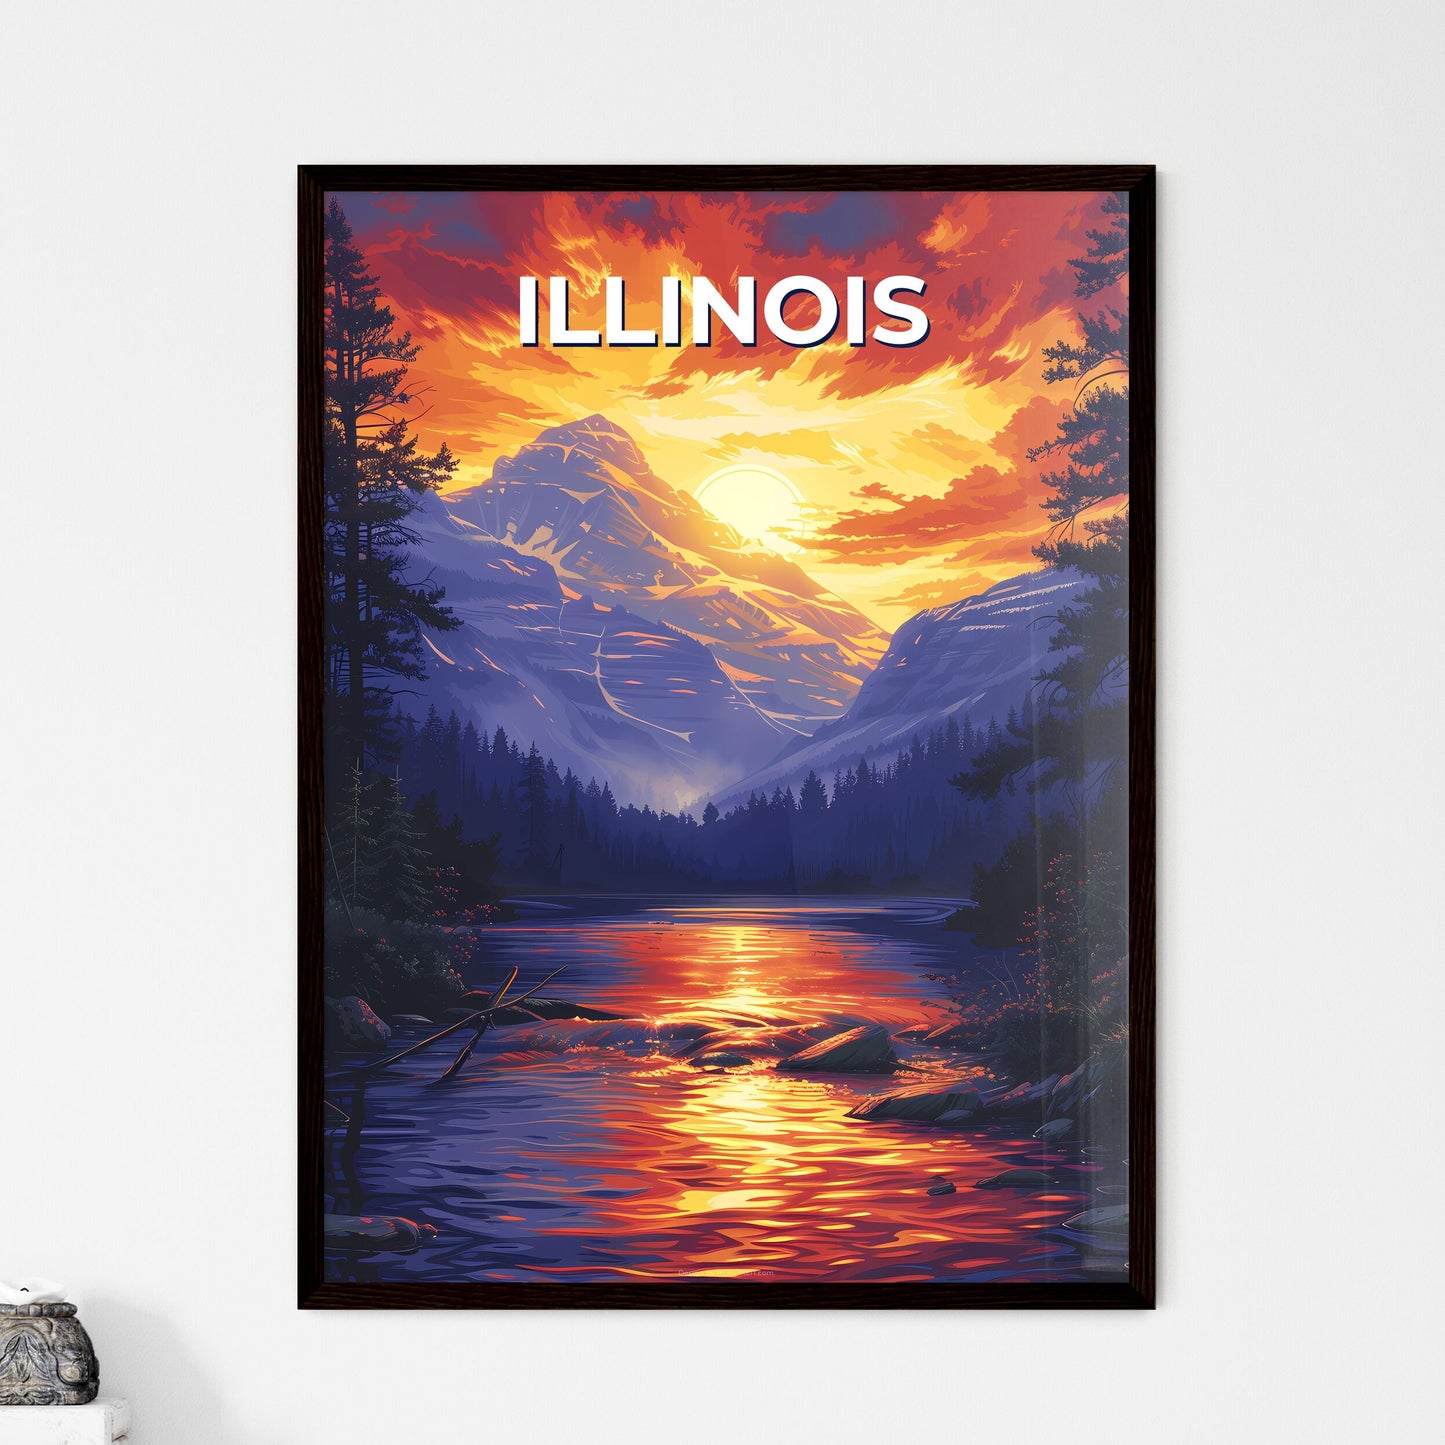 Striking Sunset Canvas Painting: Mountain River in Illinois, USA